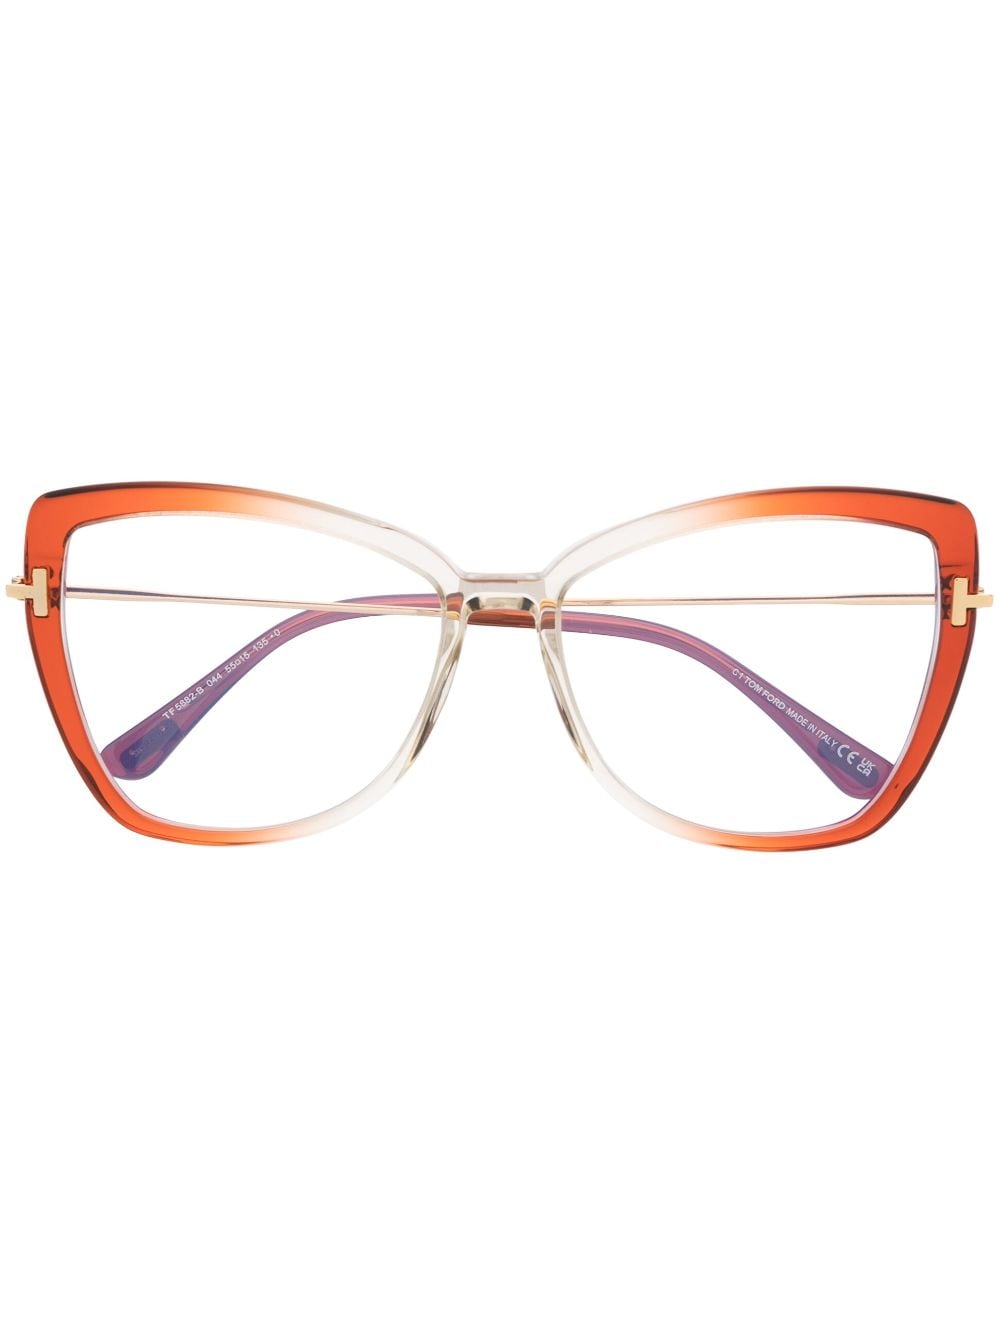 TOM FORD Eyewear Butterfly cat eye-frame glasses - Gold von TOM FORD Eyewear